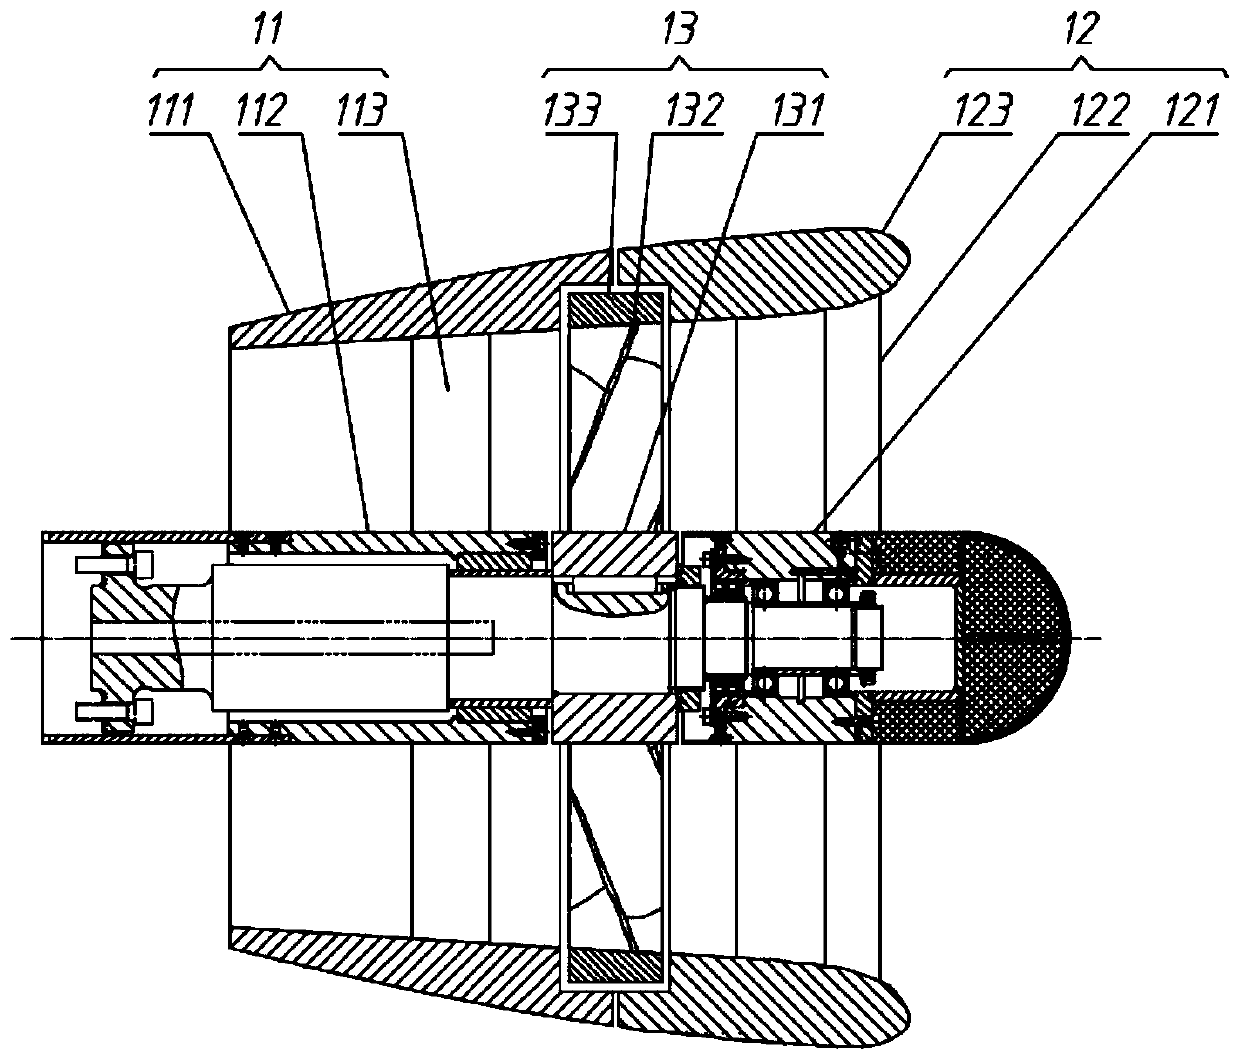 Shaftless pump-jet propeller hydrodynamic force performance test apparatus